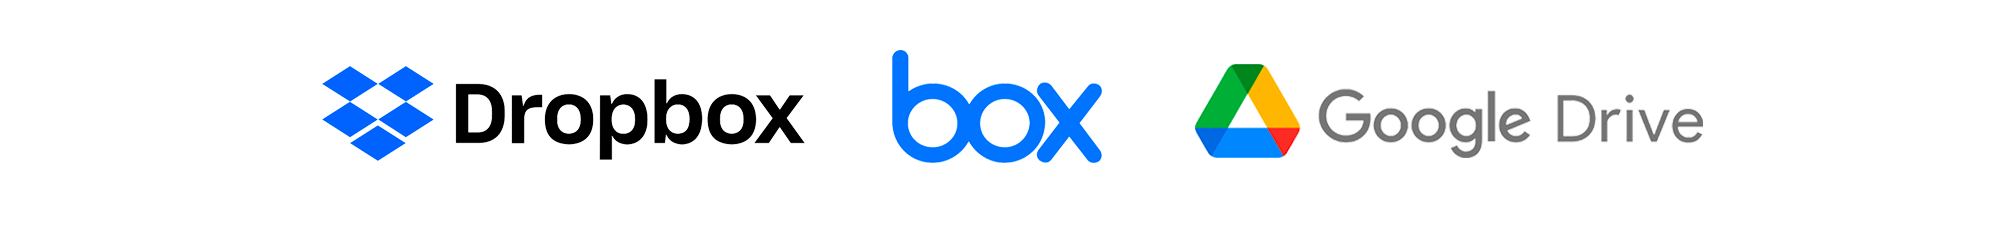 Dropbox, Box, Google Drive integration